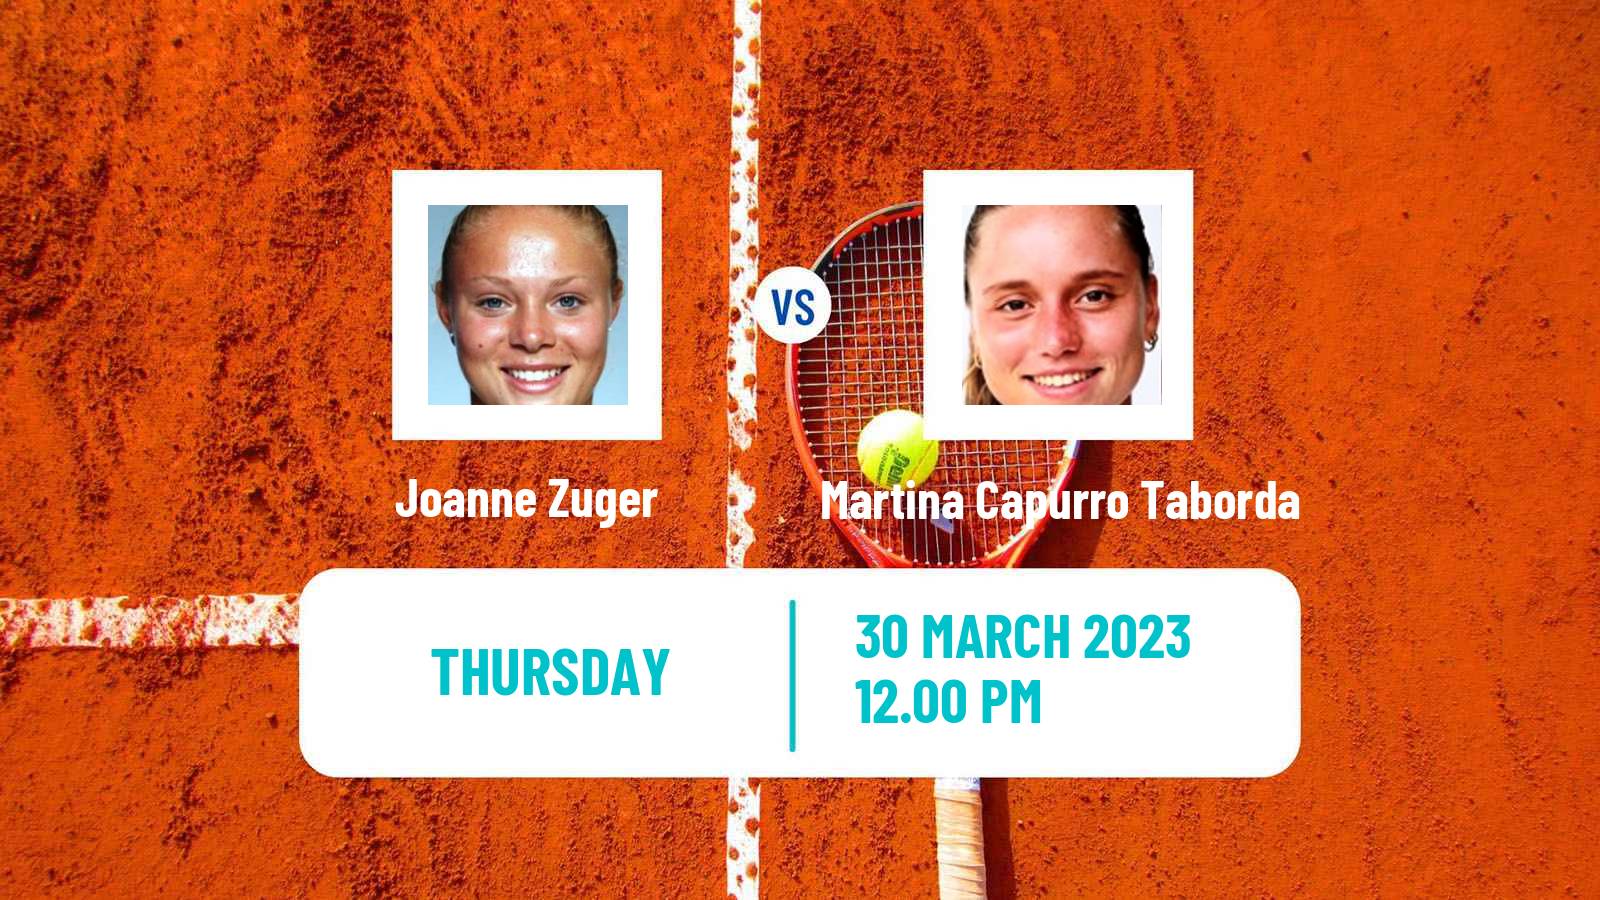 Tennis ITF Tournaments Joanne Zuger - Martina Capurro Taborda